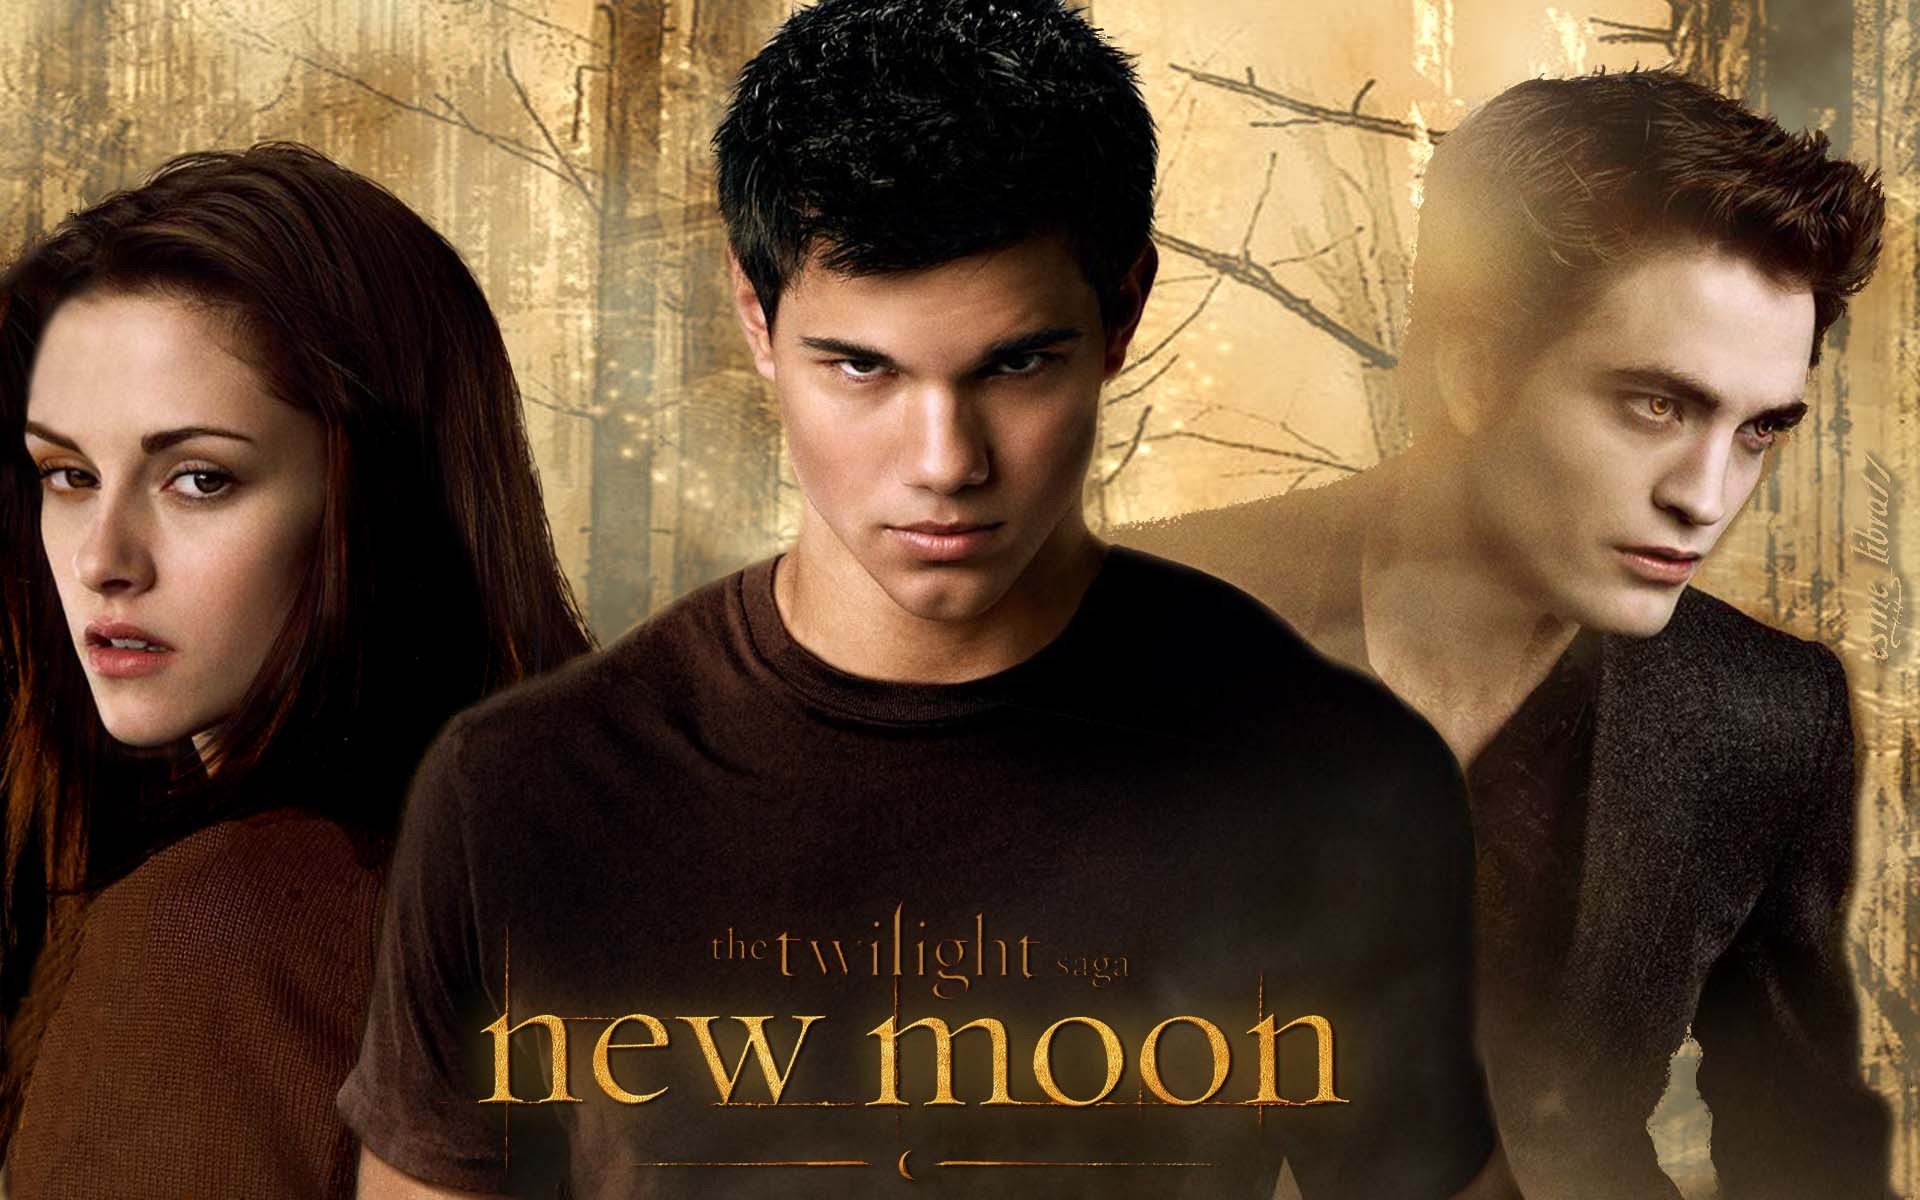 bella, Jacob and Edward - New Moon Wallpaper